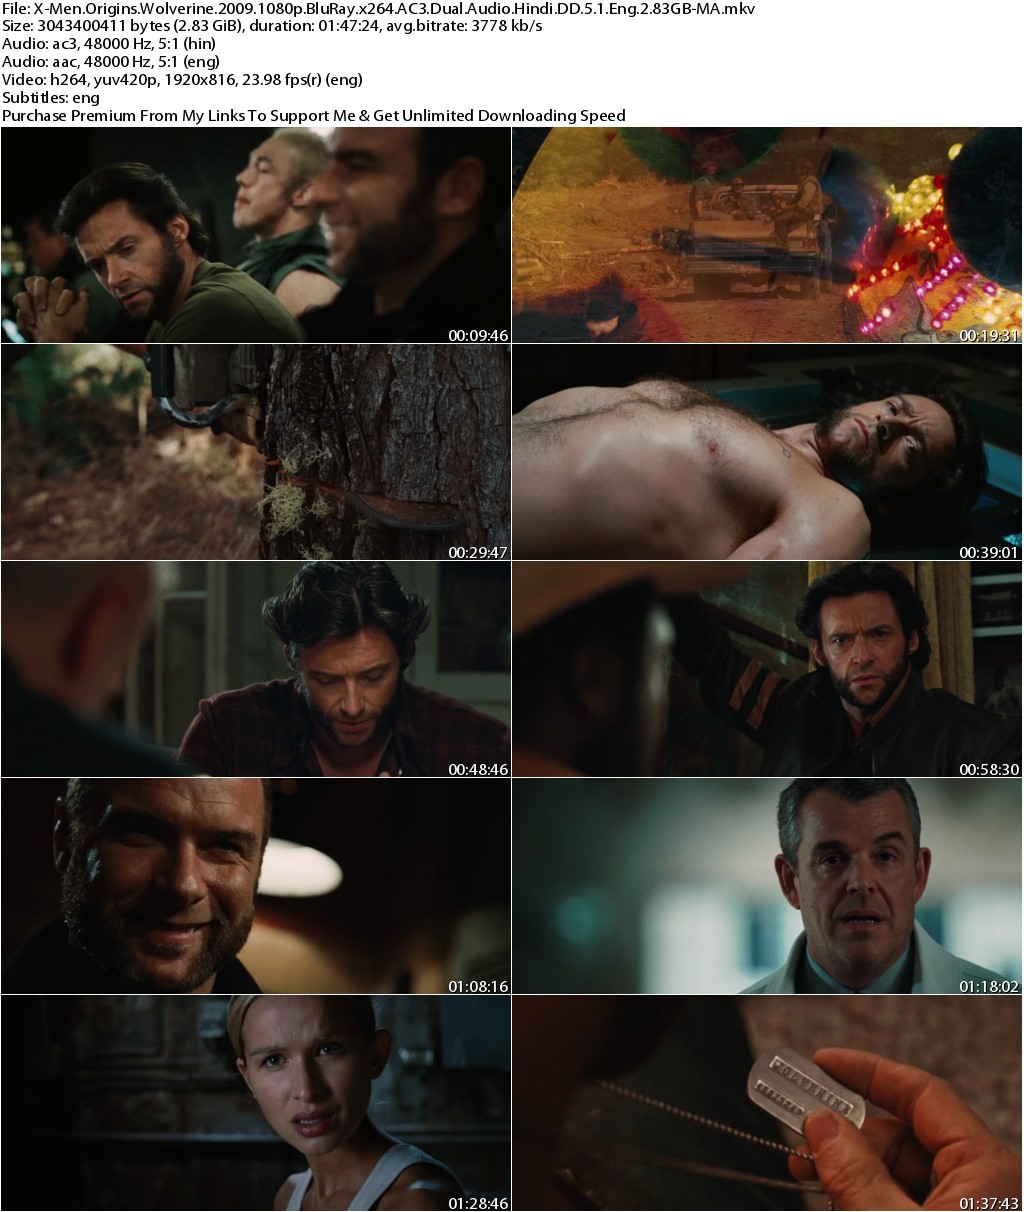 X-Men Origins Wolverine (2009) 1080p BluRay x264 AC3 Dual Audio Hindi DD 5.1 Eng 2.83GB-MA